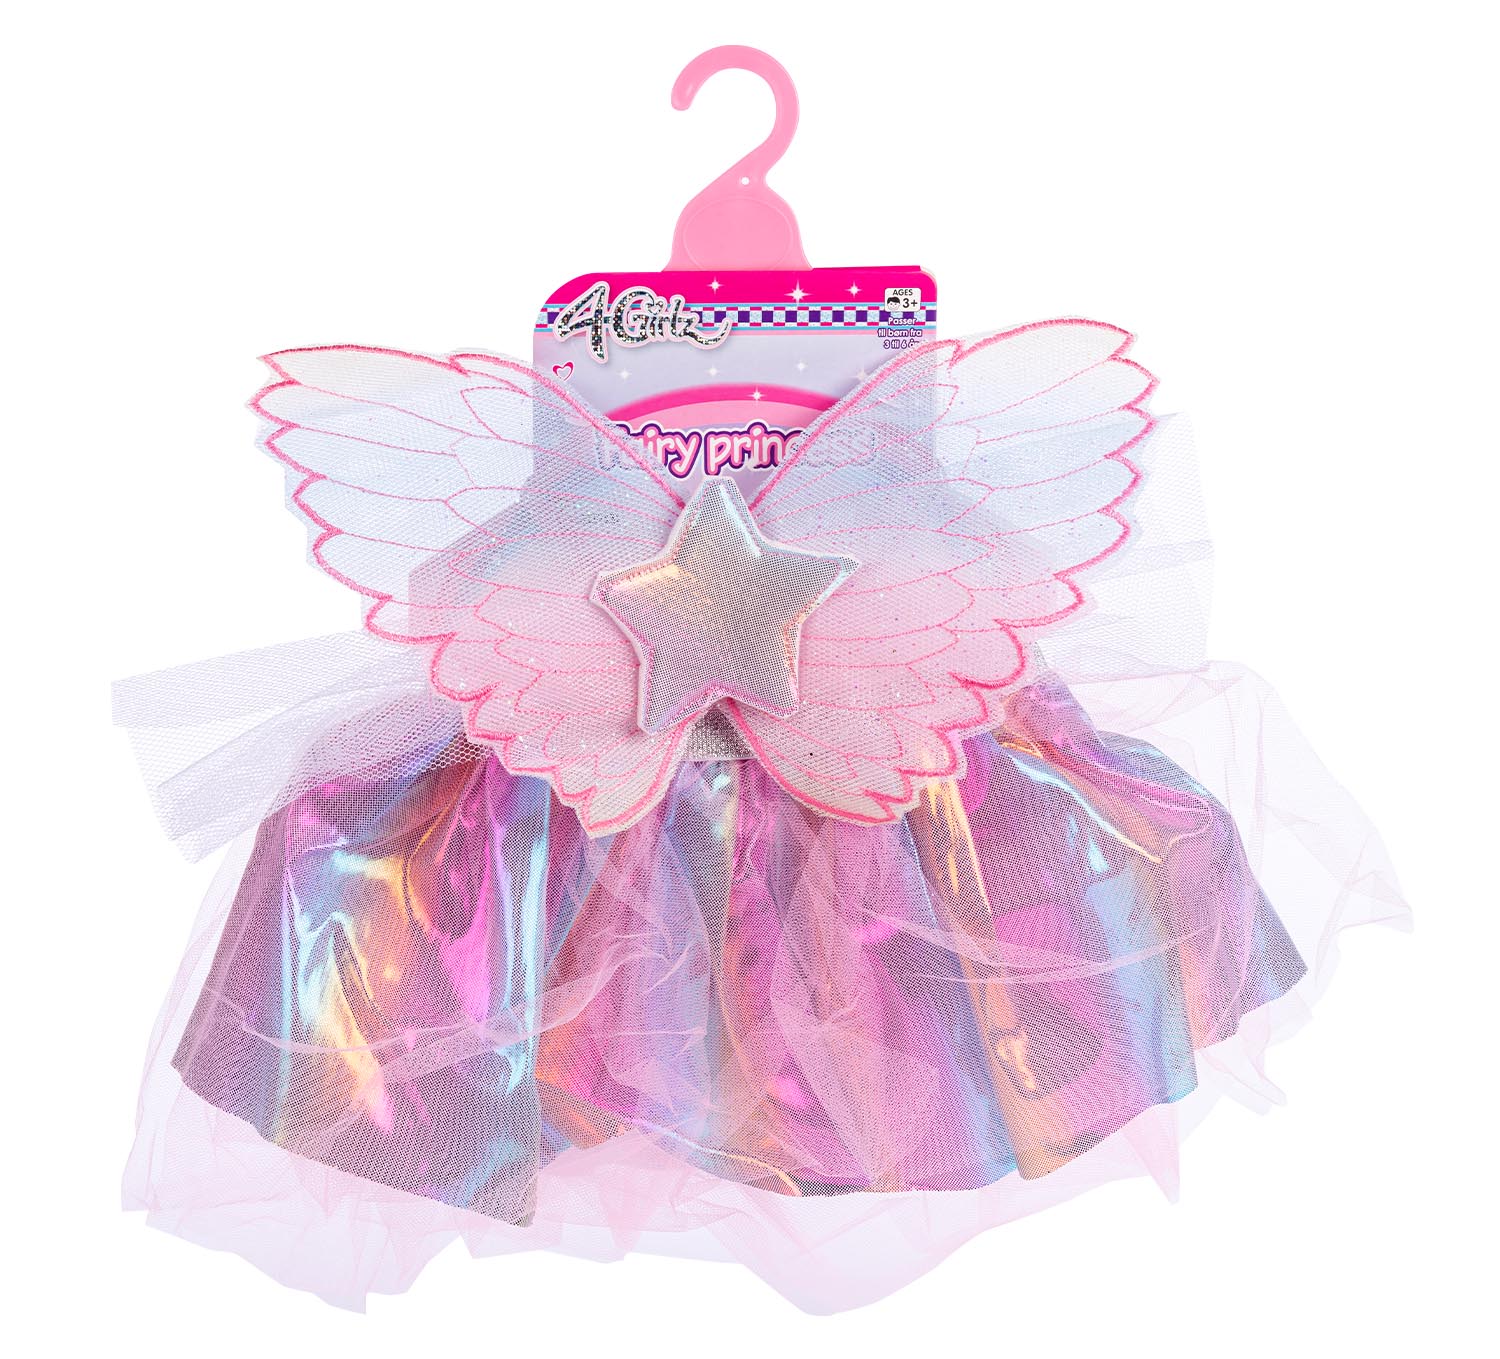 4-Girlz - Double skirt and wings (42483)